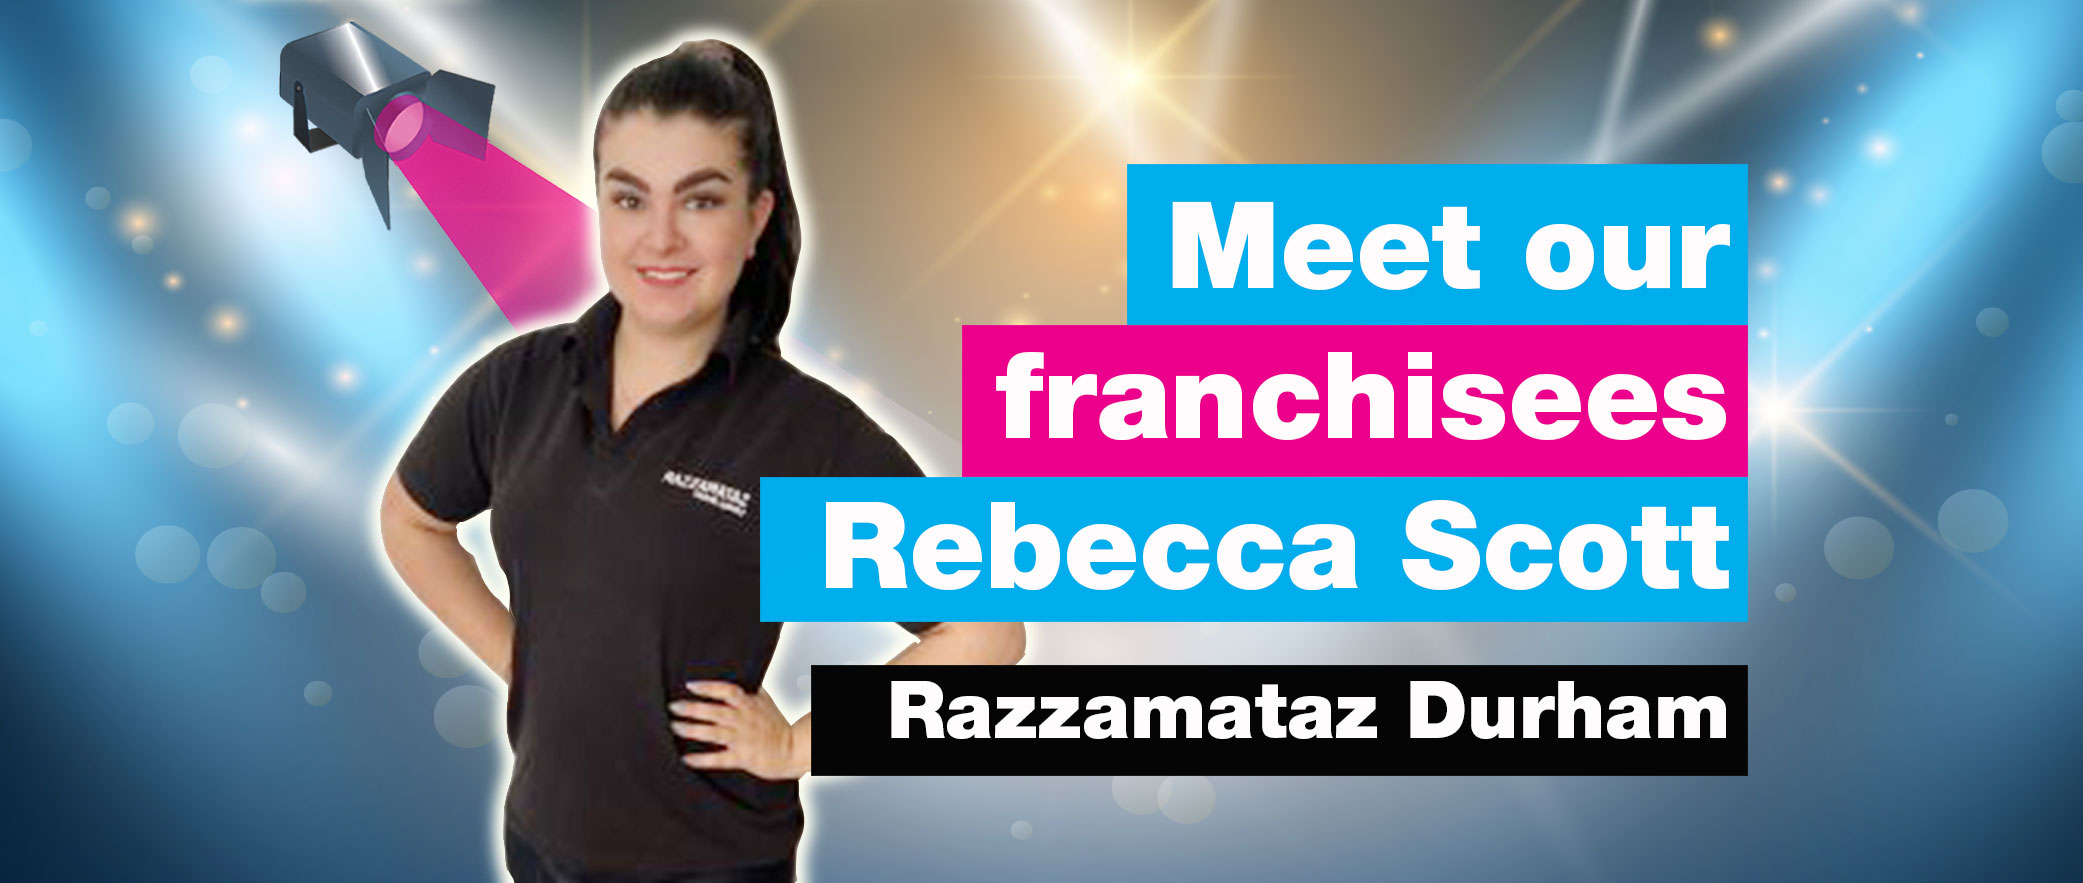 Meet new razzamataz franchisee Rebecca Scott